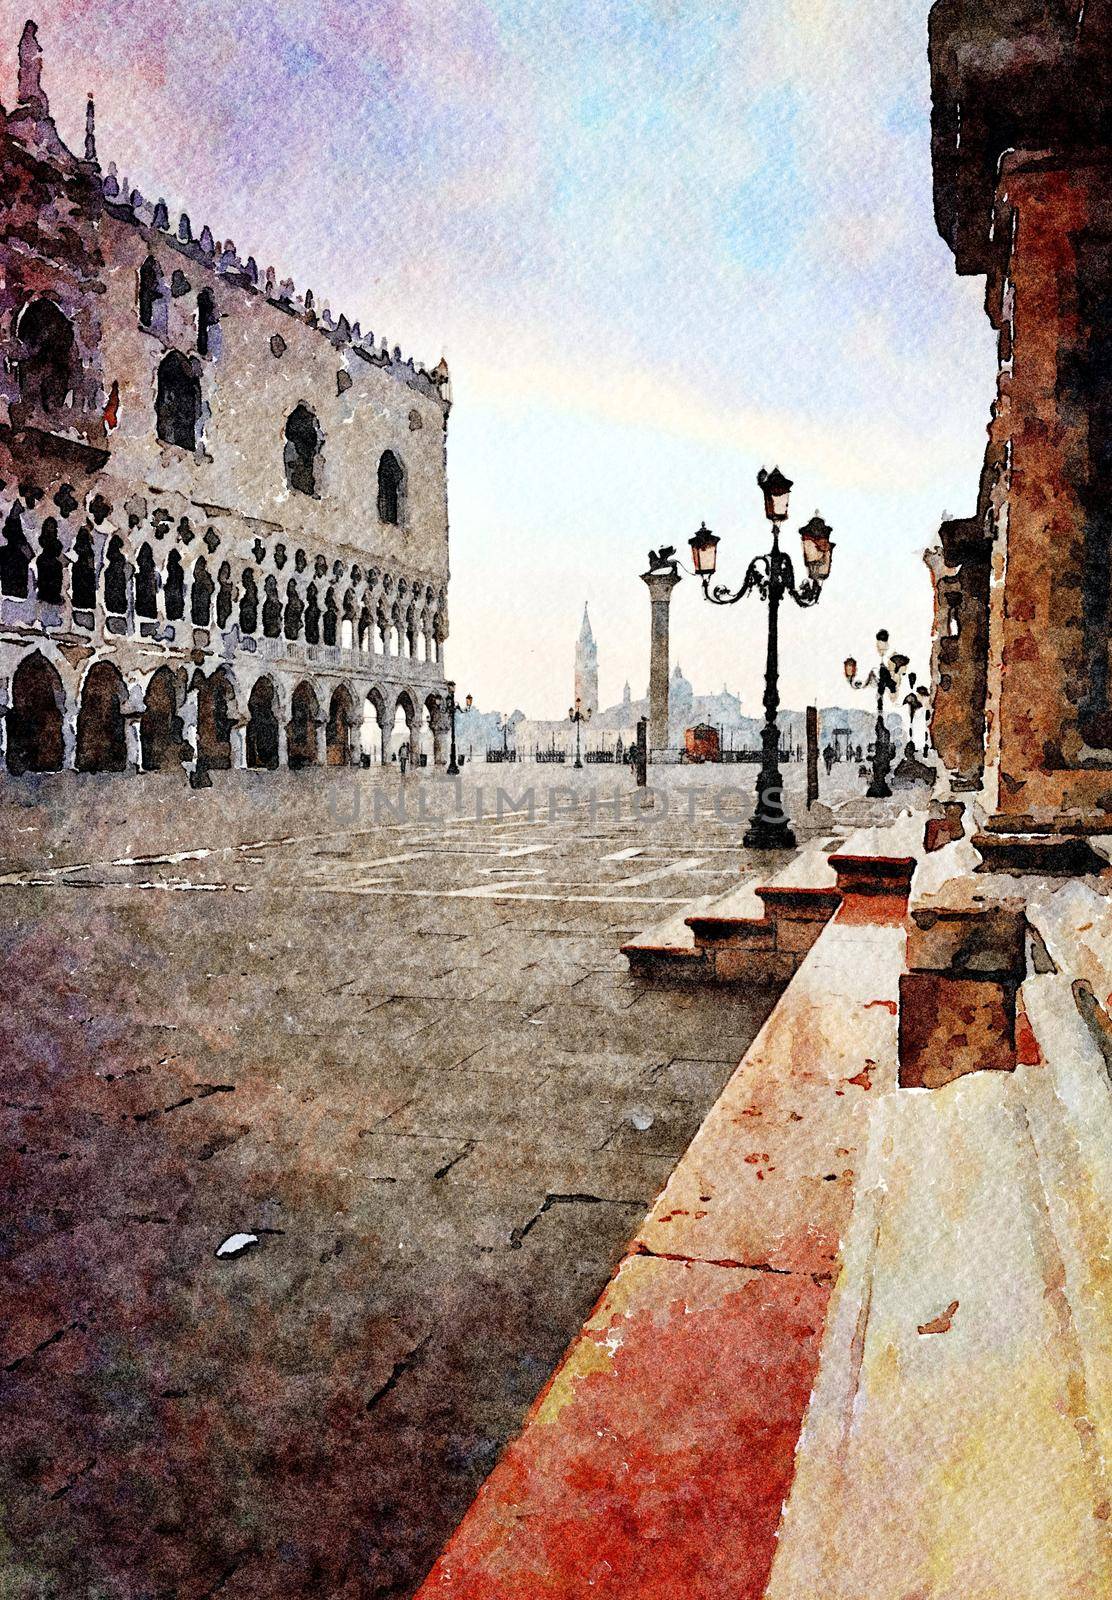 Watercolor which represents a glimpse of the main square of Venice